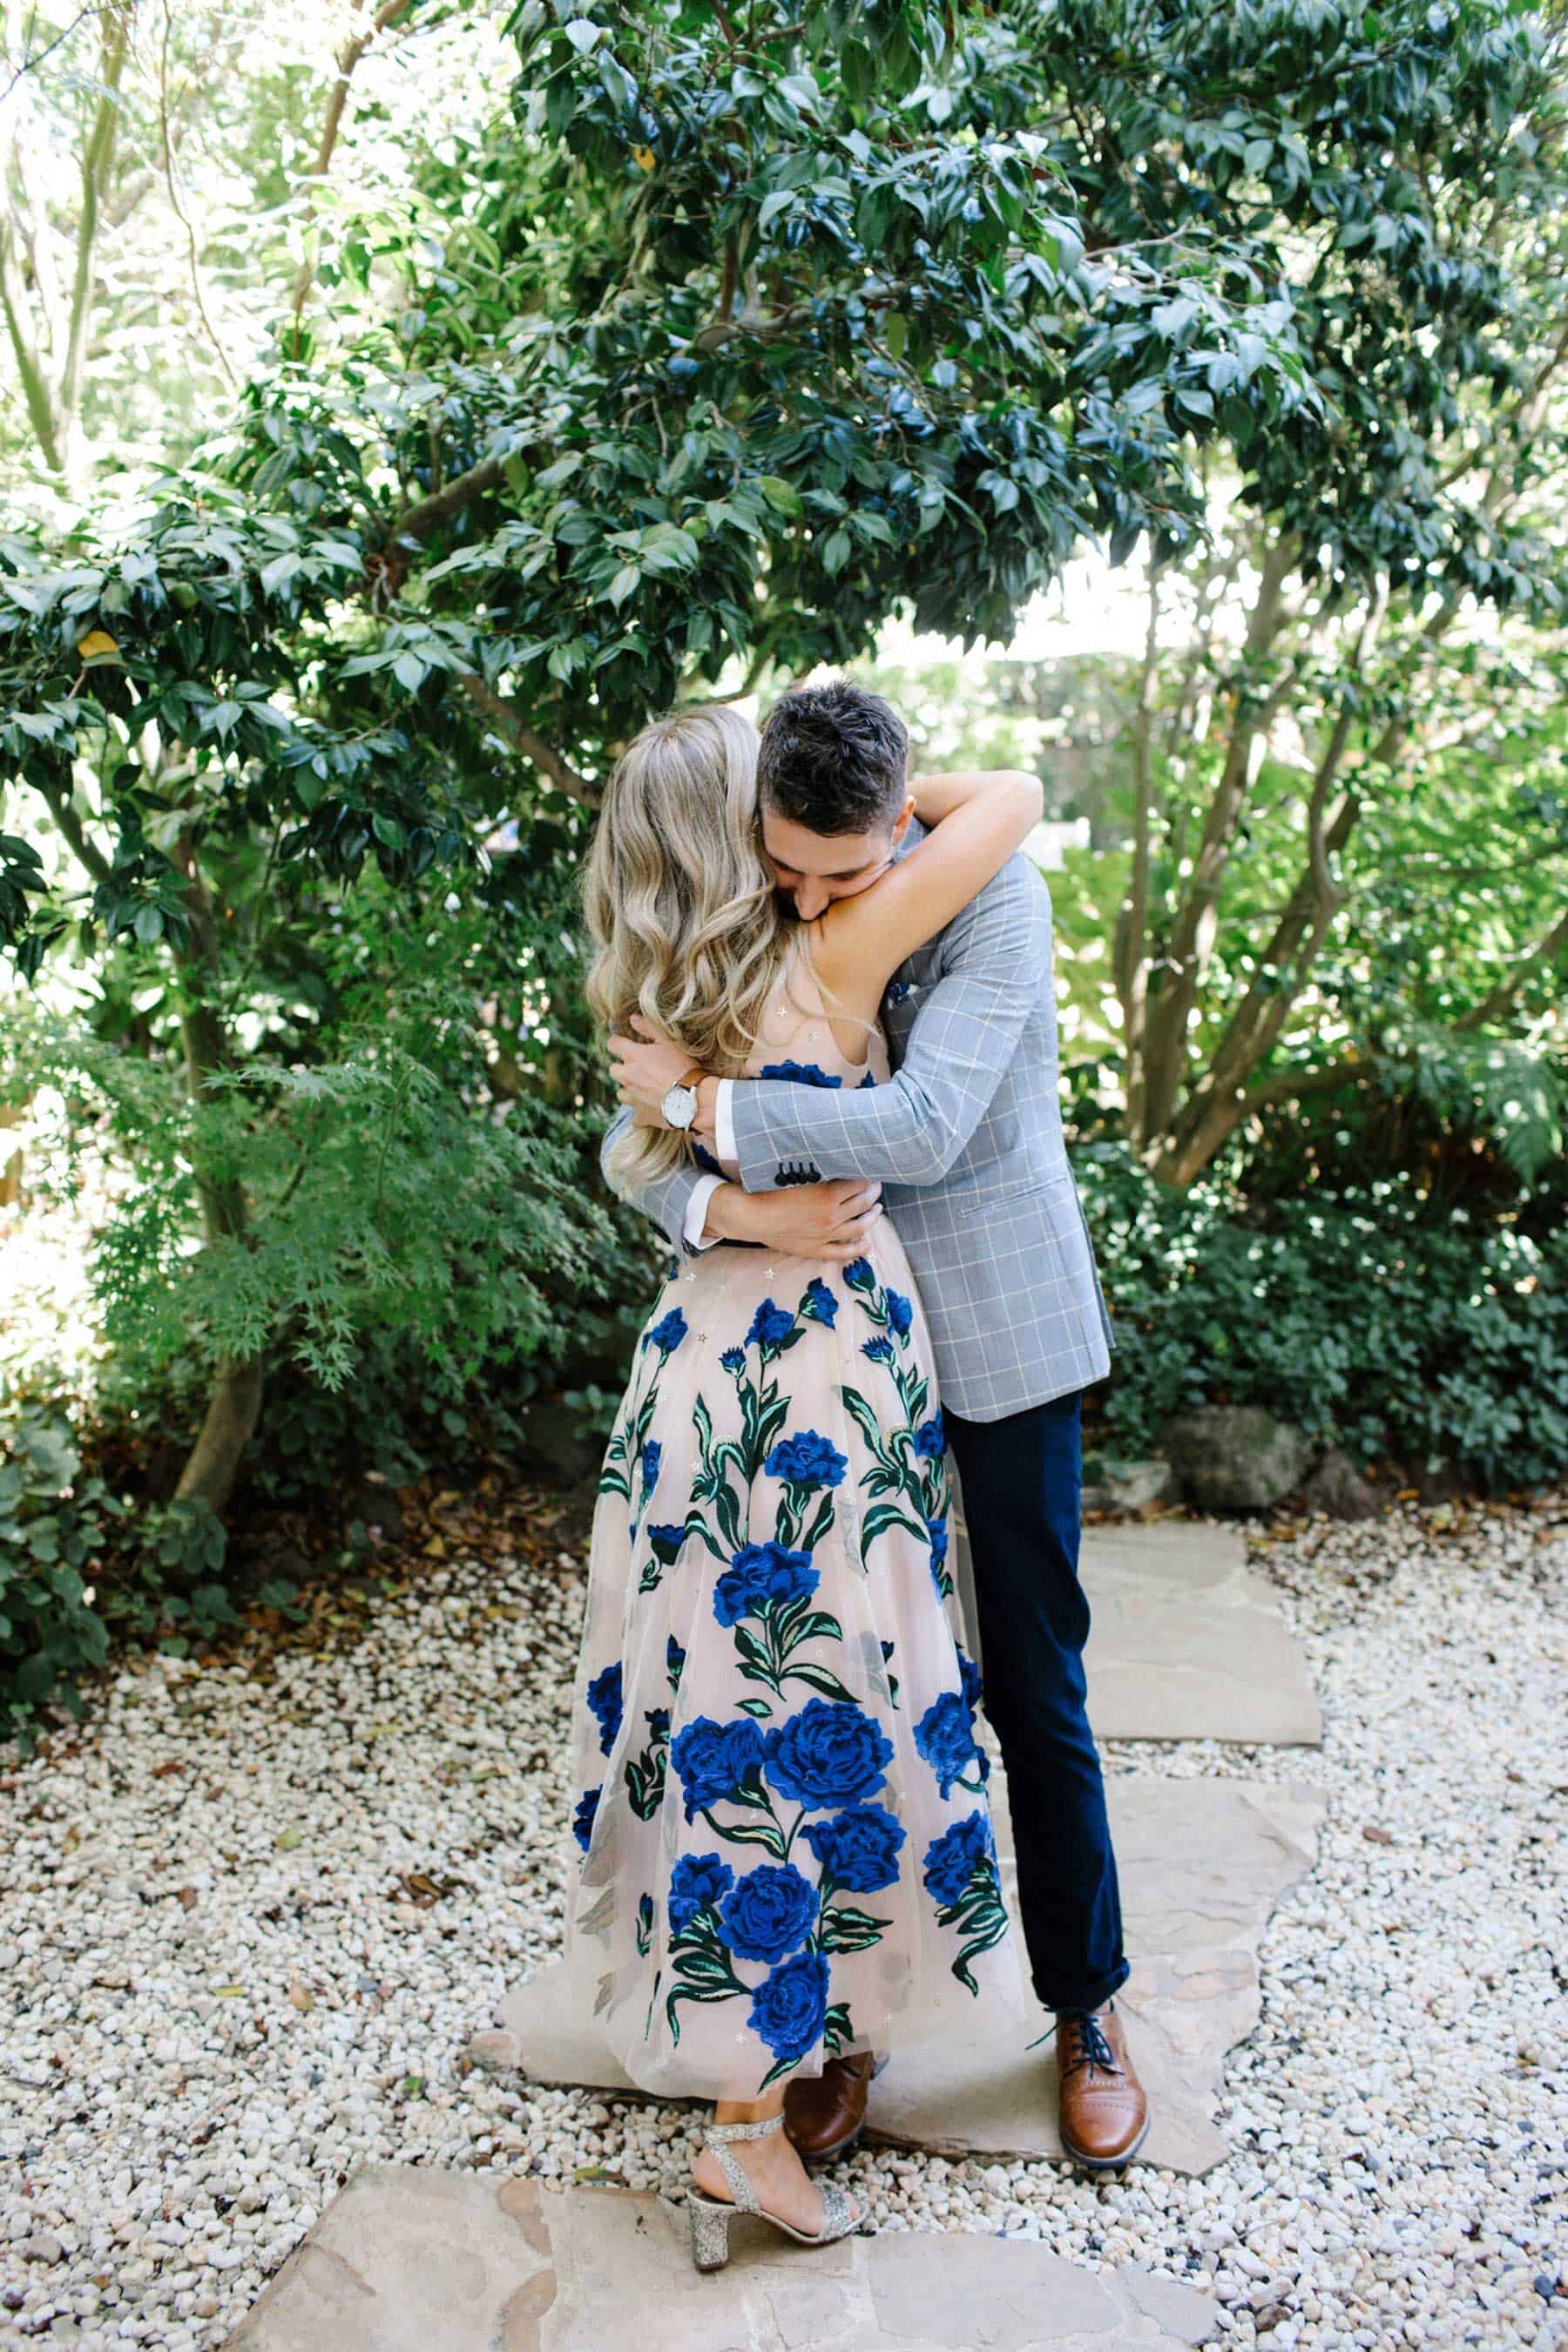 blush wedding dress with blue floral applique